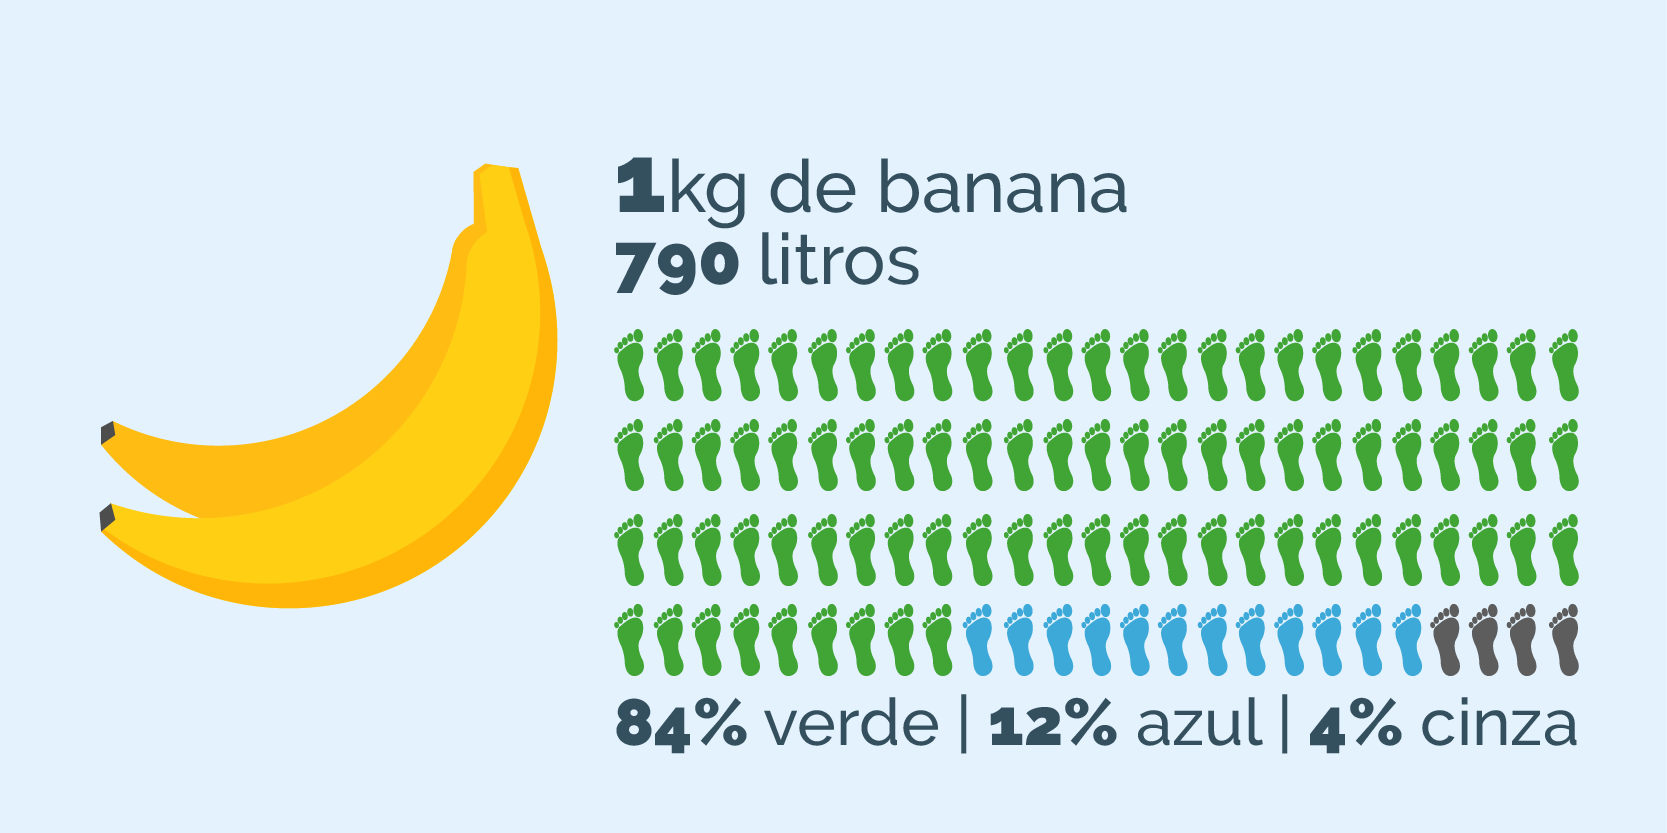 1kg de banana